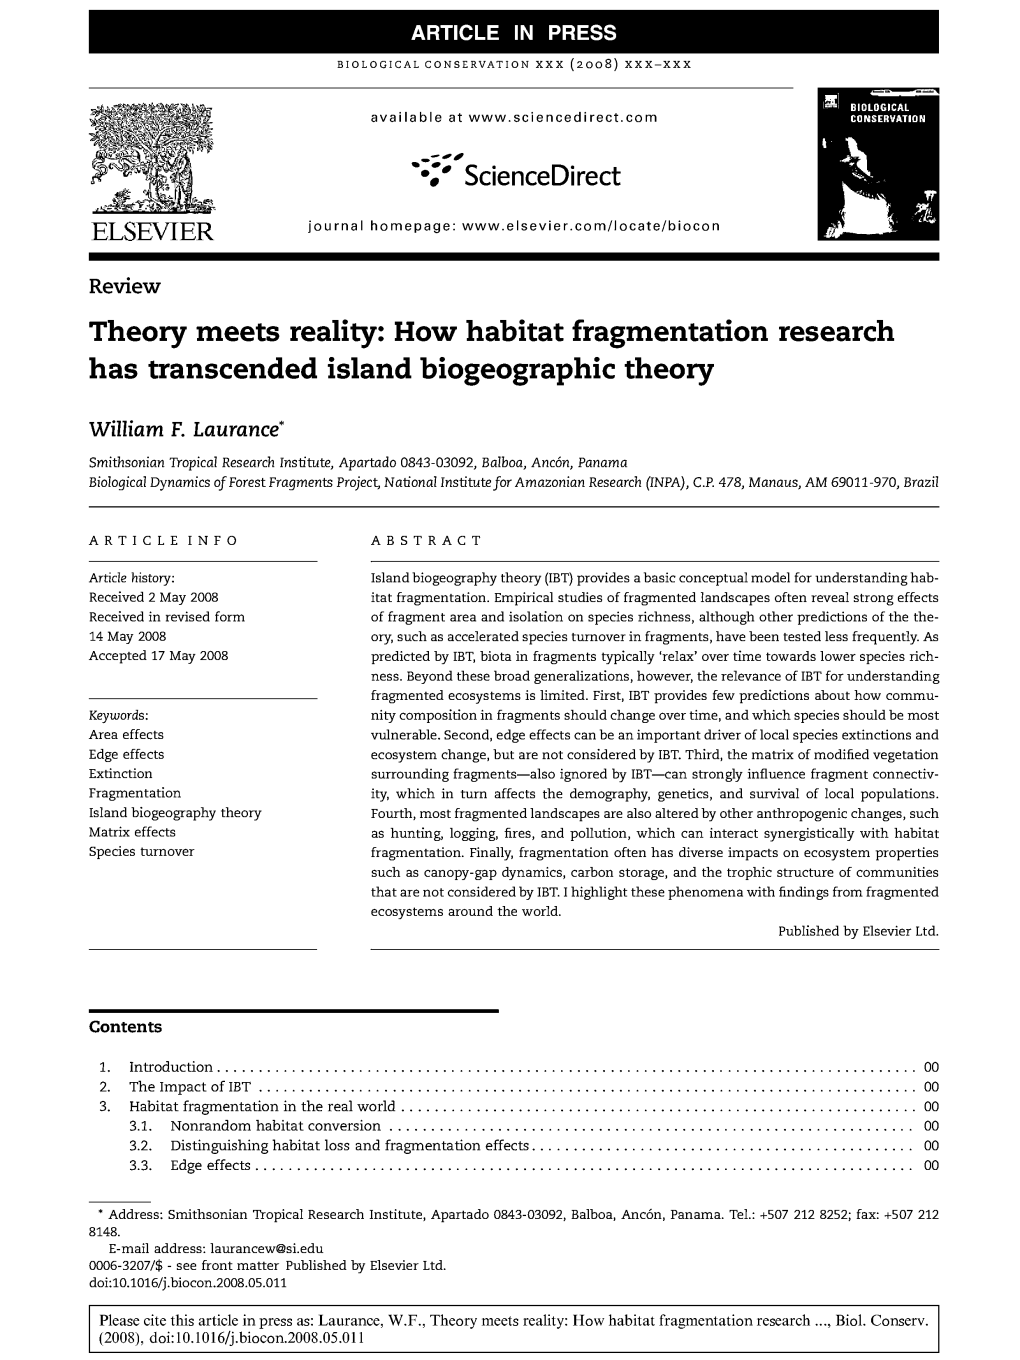 Theory Meets Reality: How Habitat Fragmentation Research Has Transcended Island Biogeographic Theory